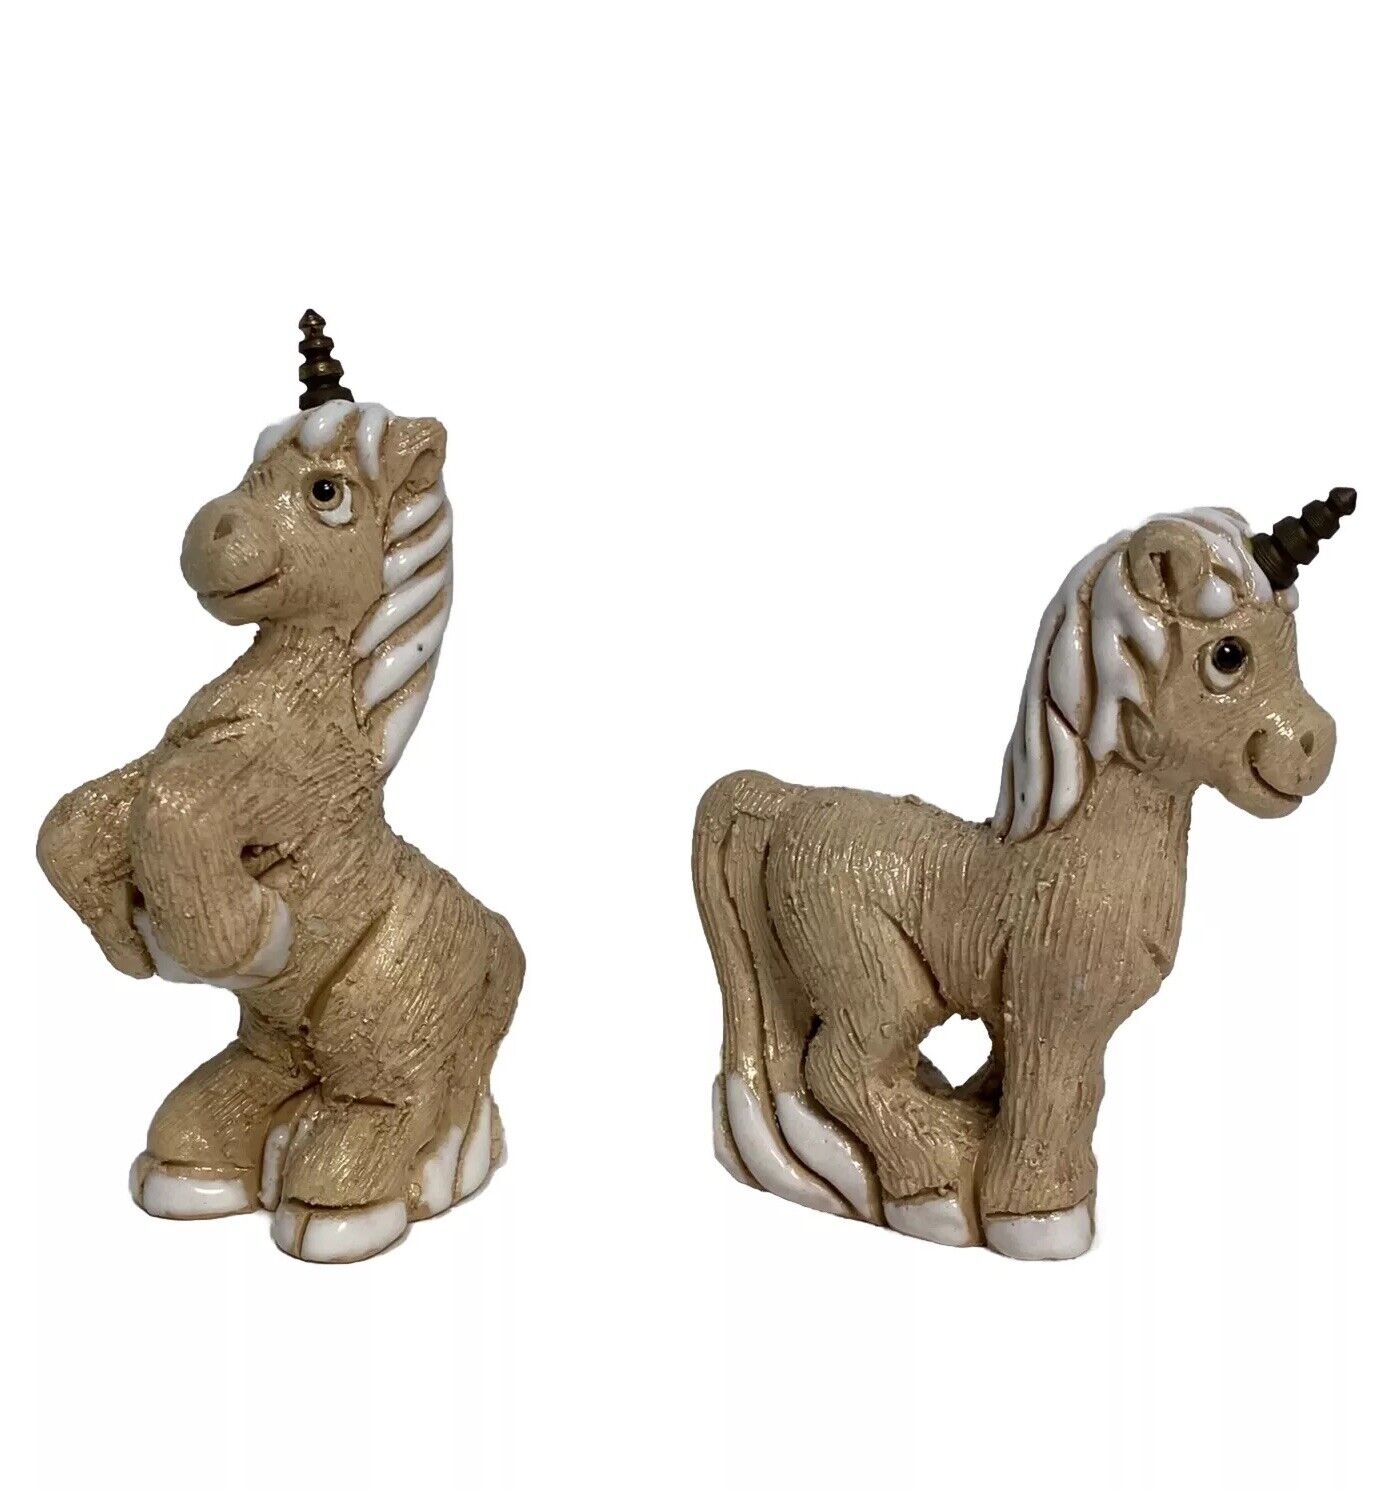 2 ct VTG Artesania Rinconada Unicorn Figurines Uruguay Pottery Enamel Kitsch